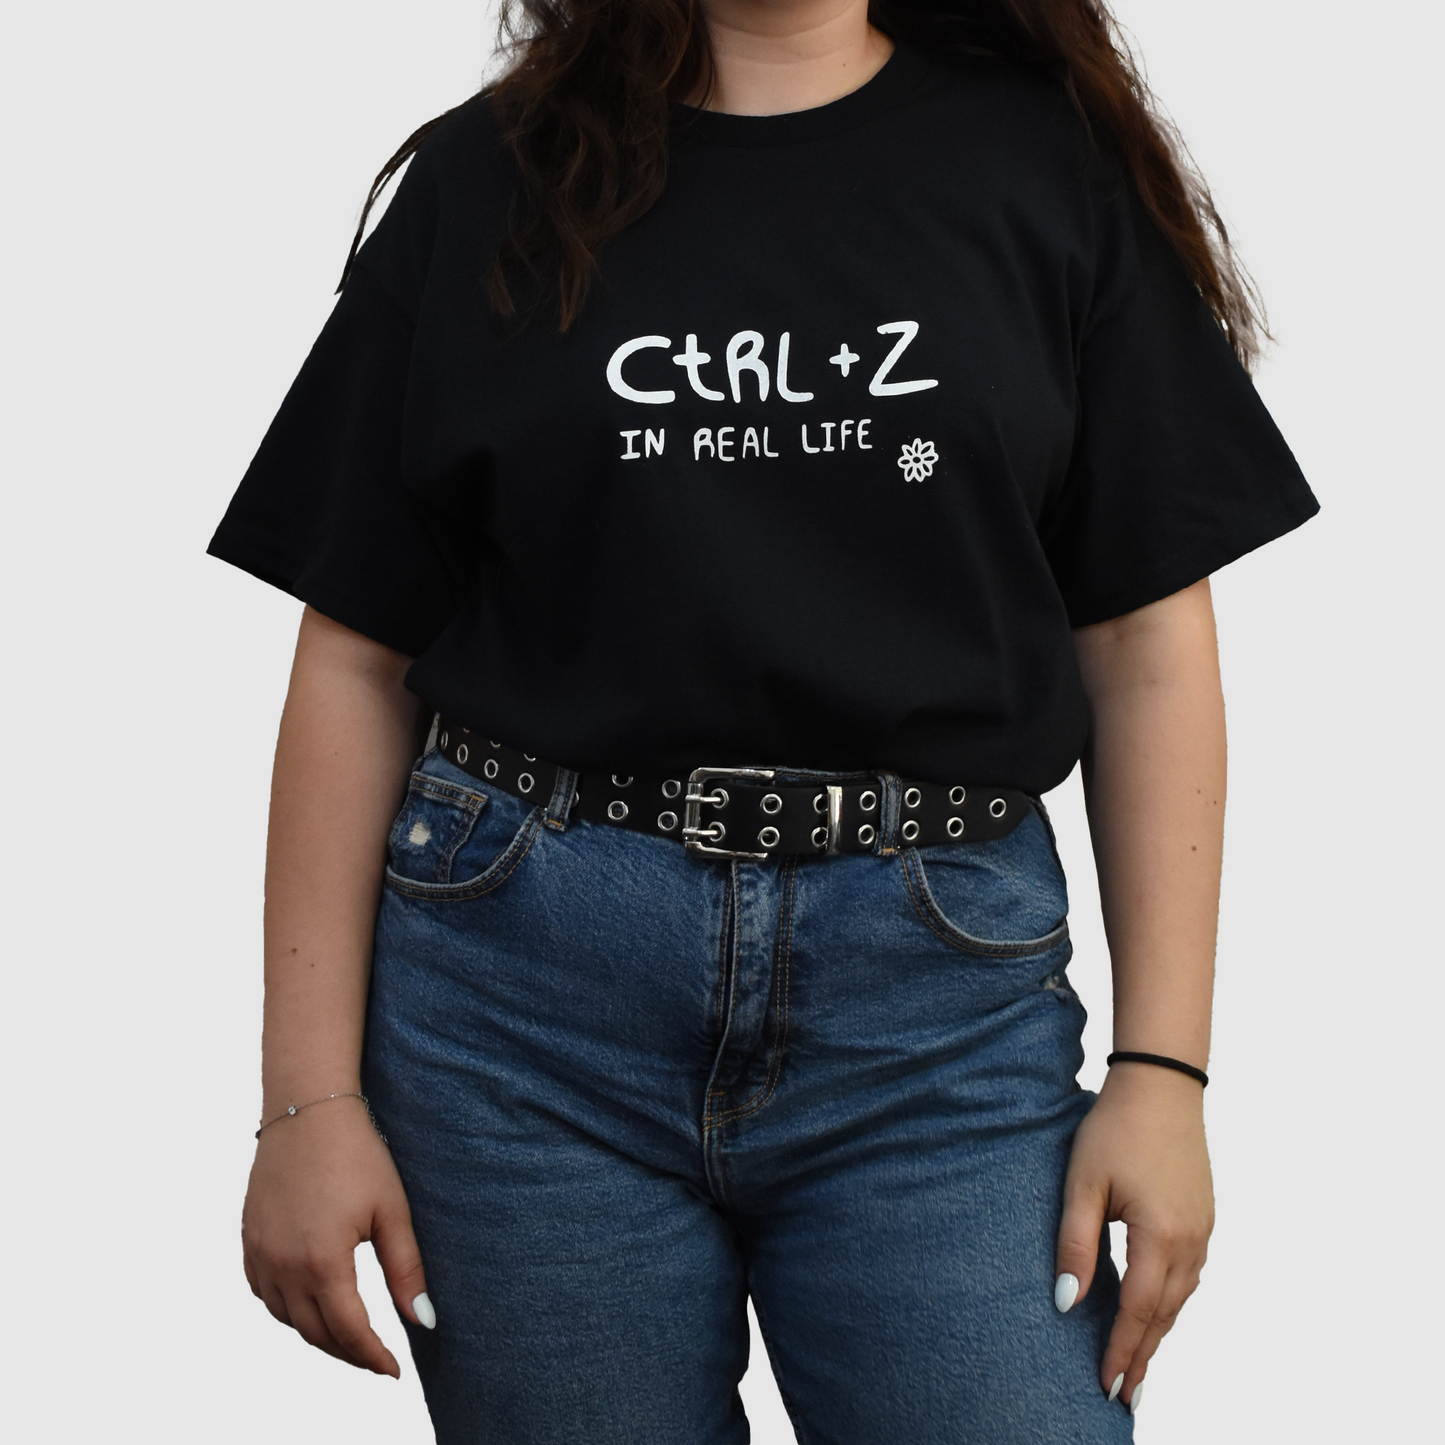 Keyboard - ctrl z in real life t-shirt